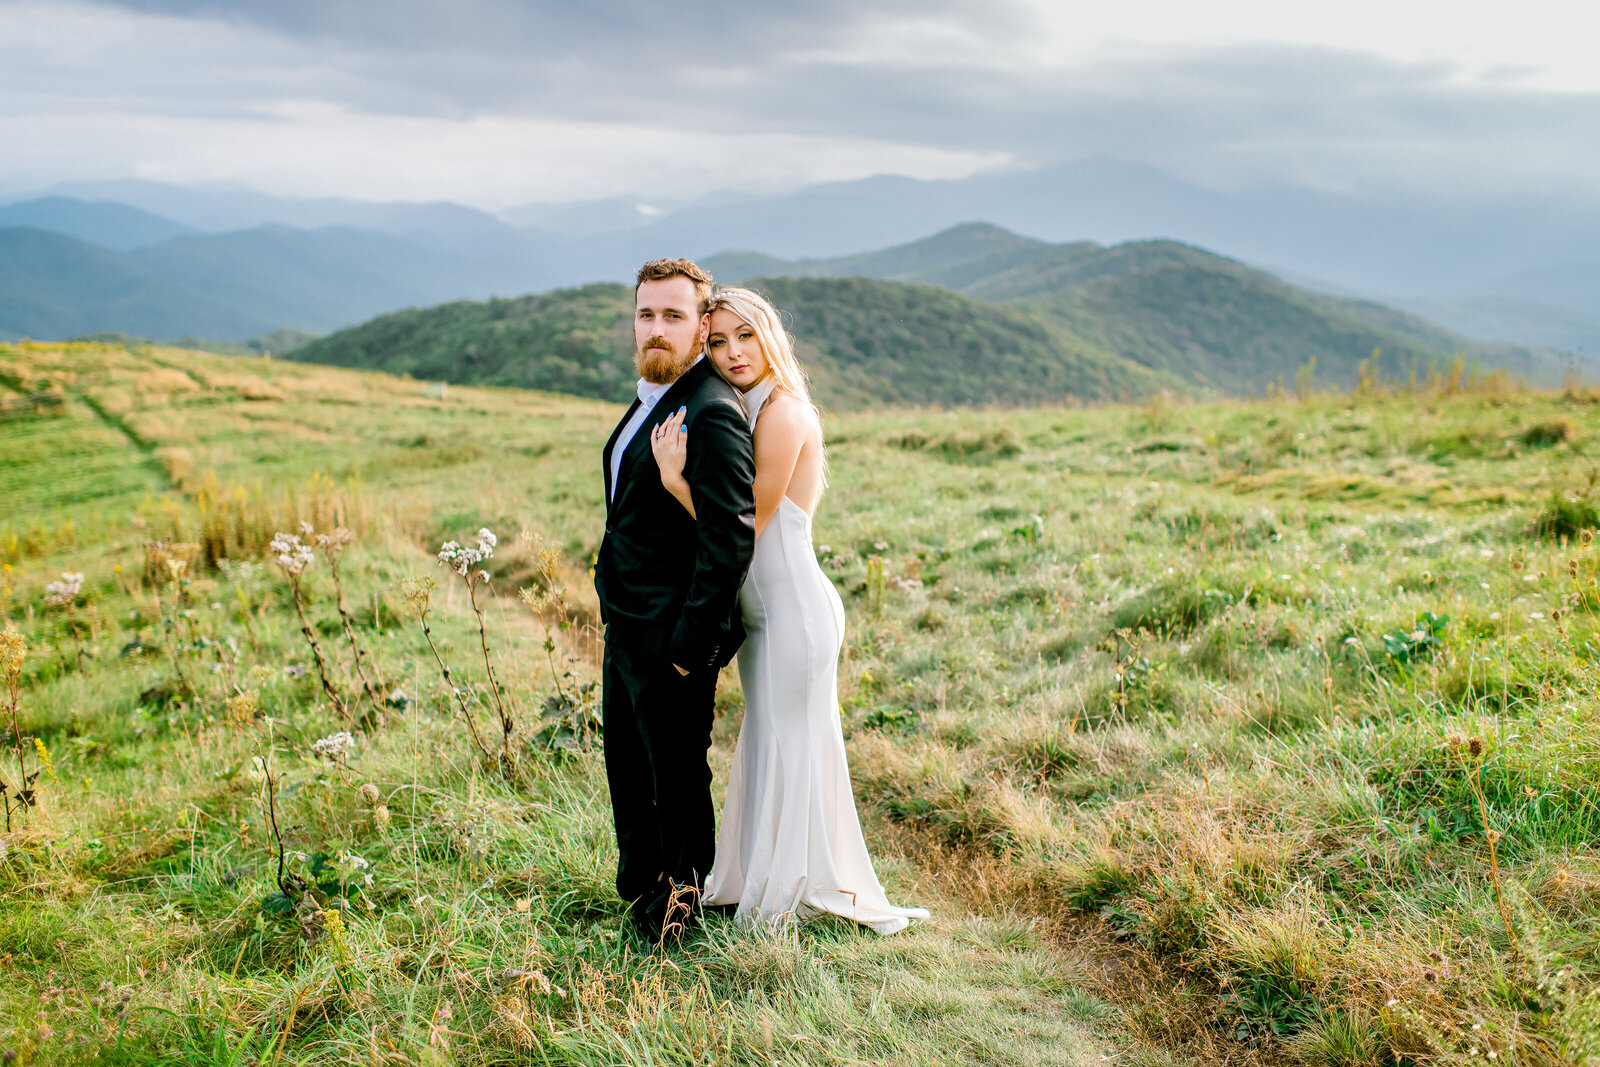 Max Patch NC | Destination Wedding Photographer | Jennifer G Photography-2